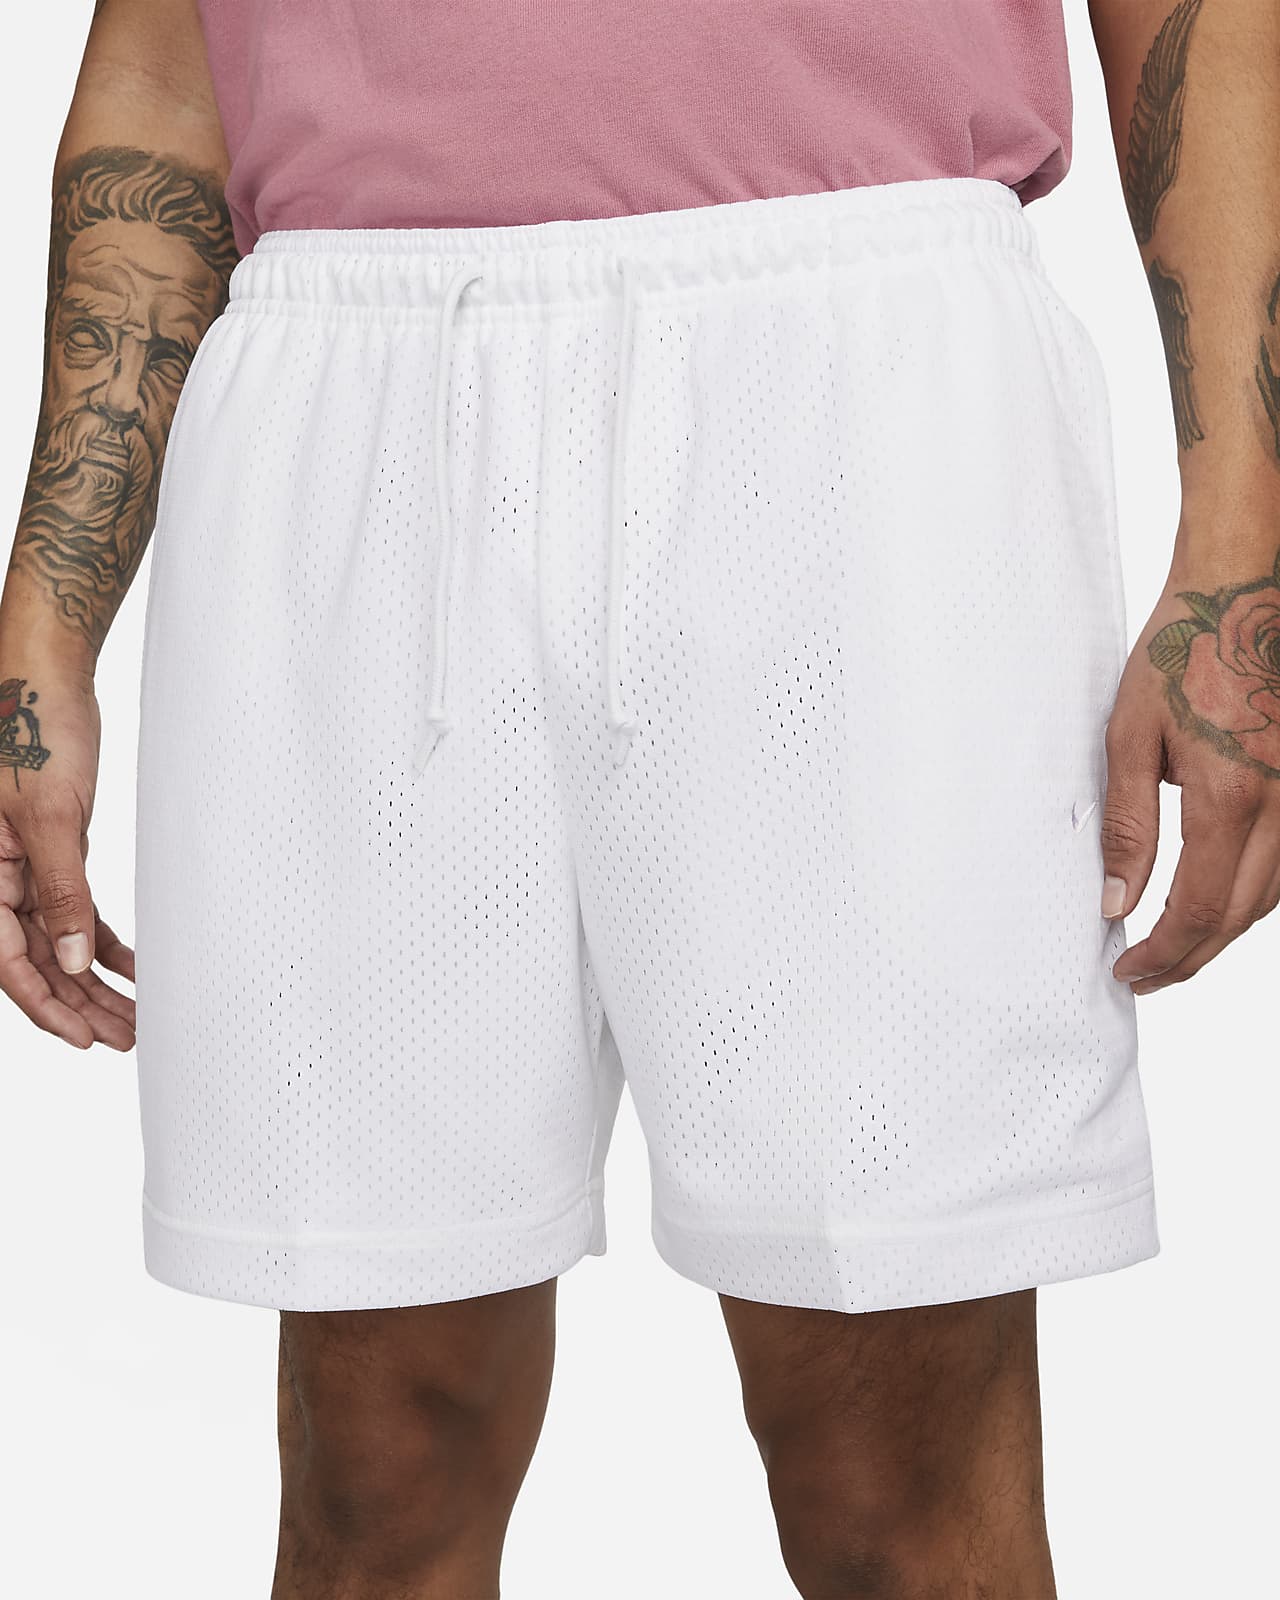 Sportswear Shorts. Nike Men\'s Authentics Mesh